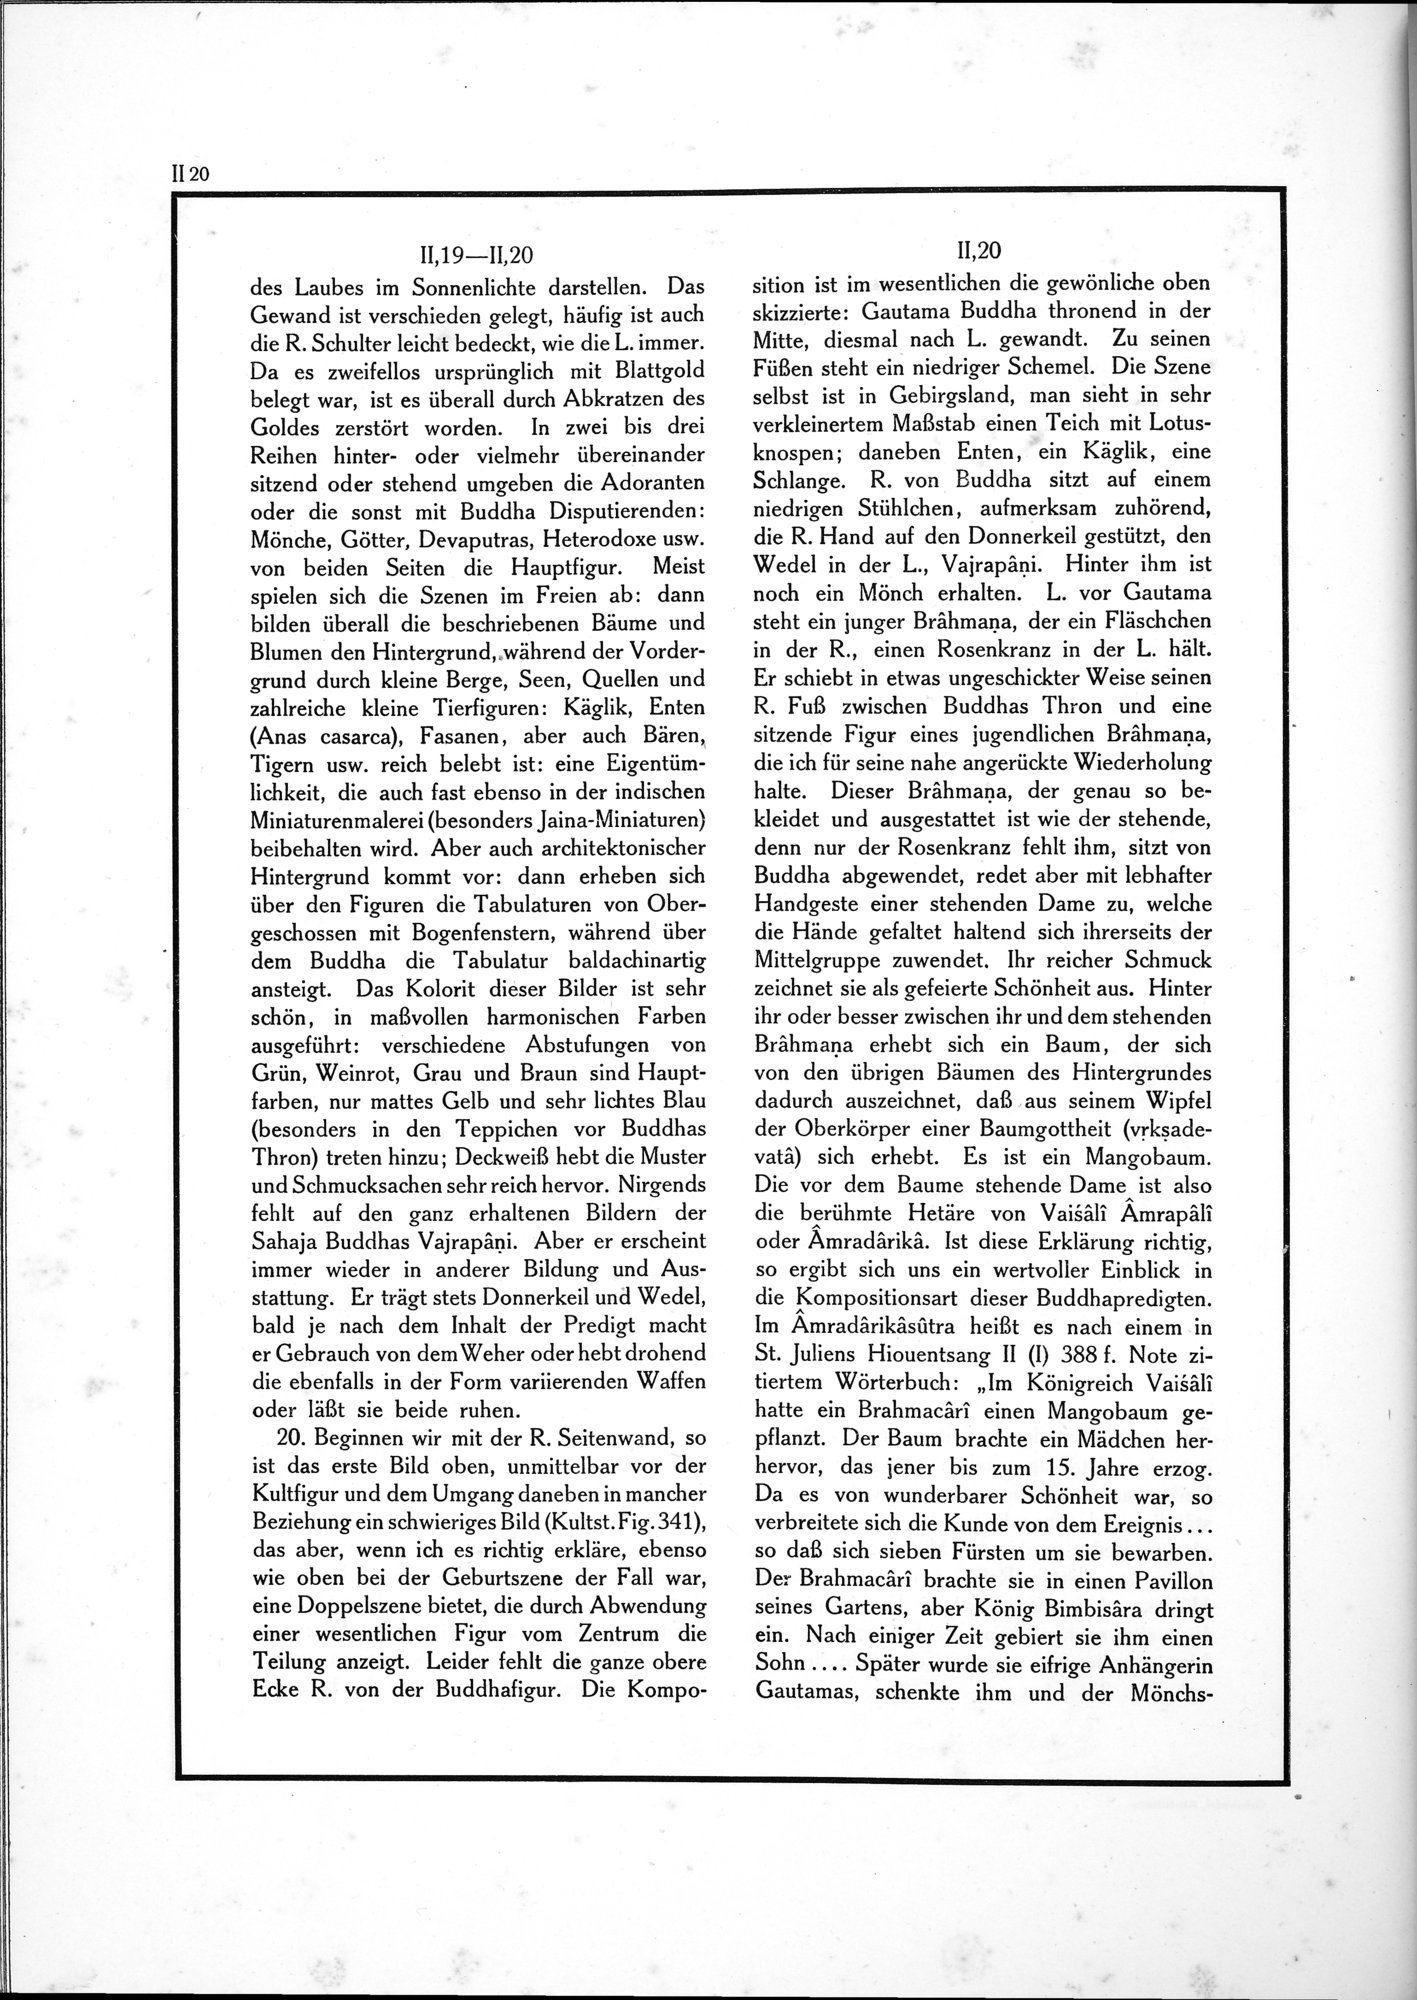 Alt-Kutscha : vol.1 / Page 126 (Grayscale High Resolution Image)